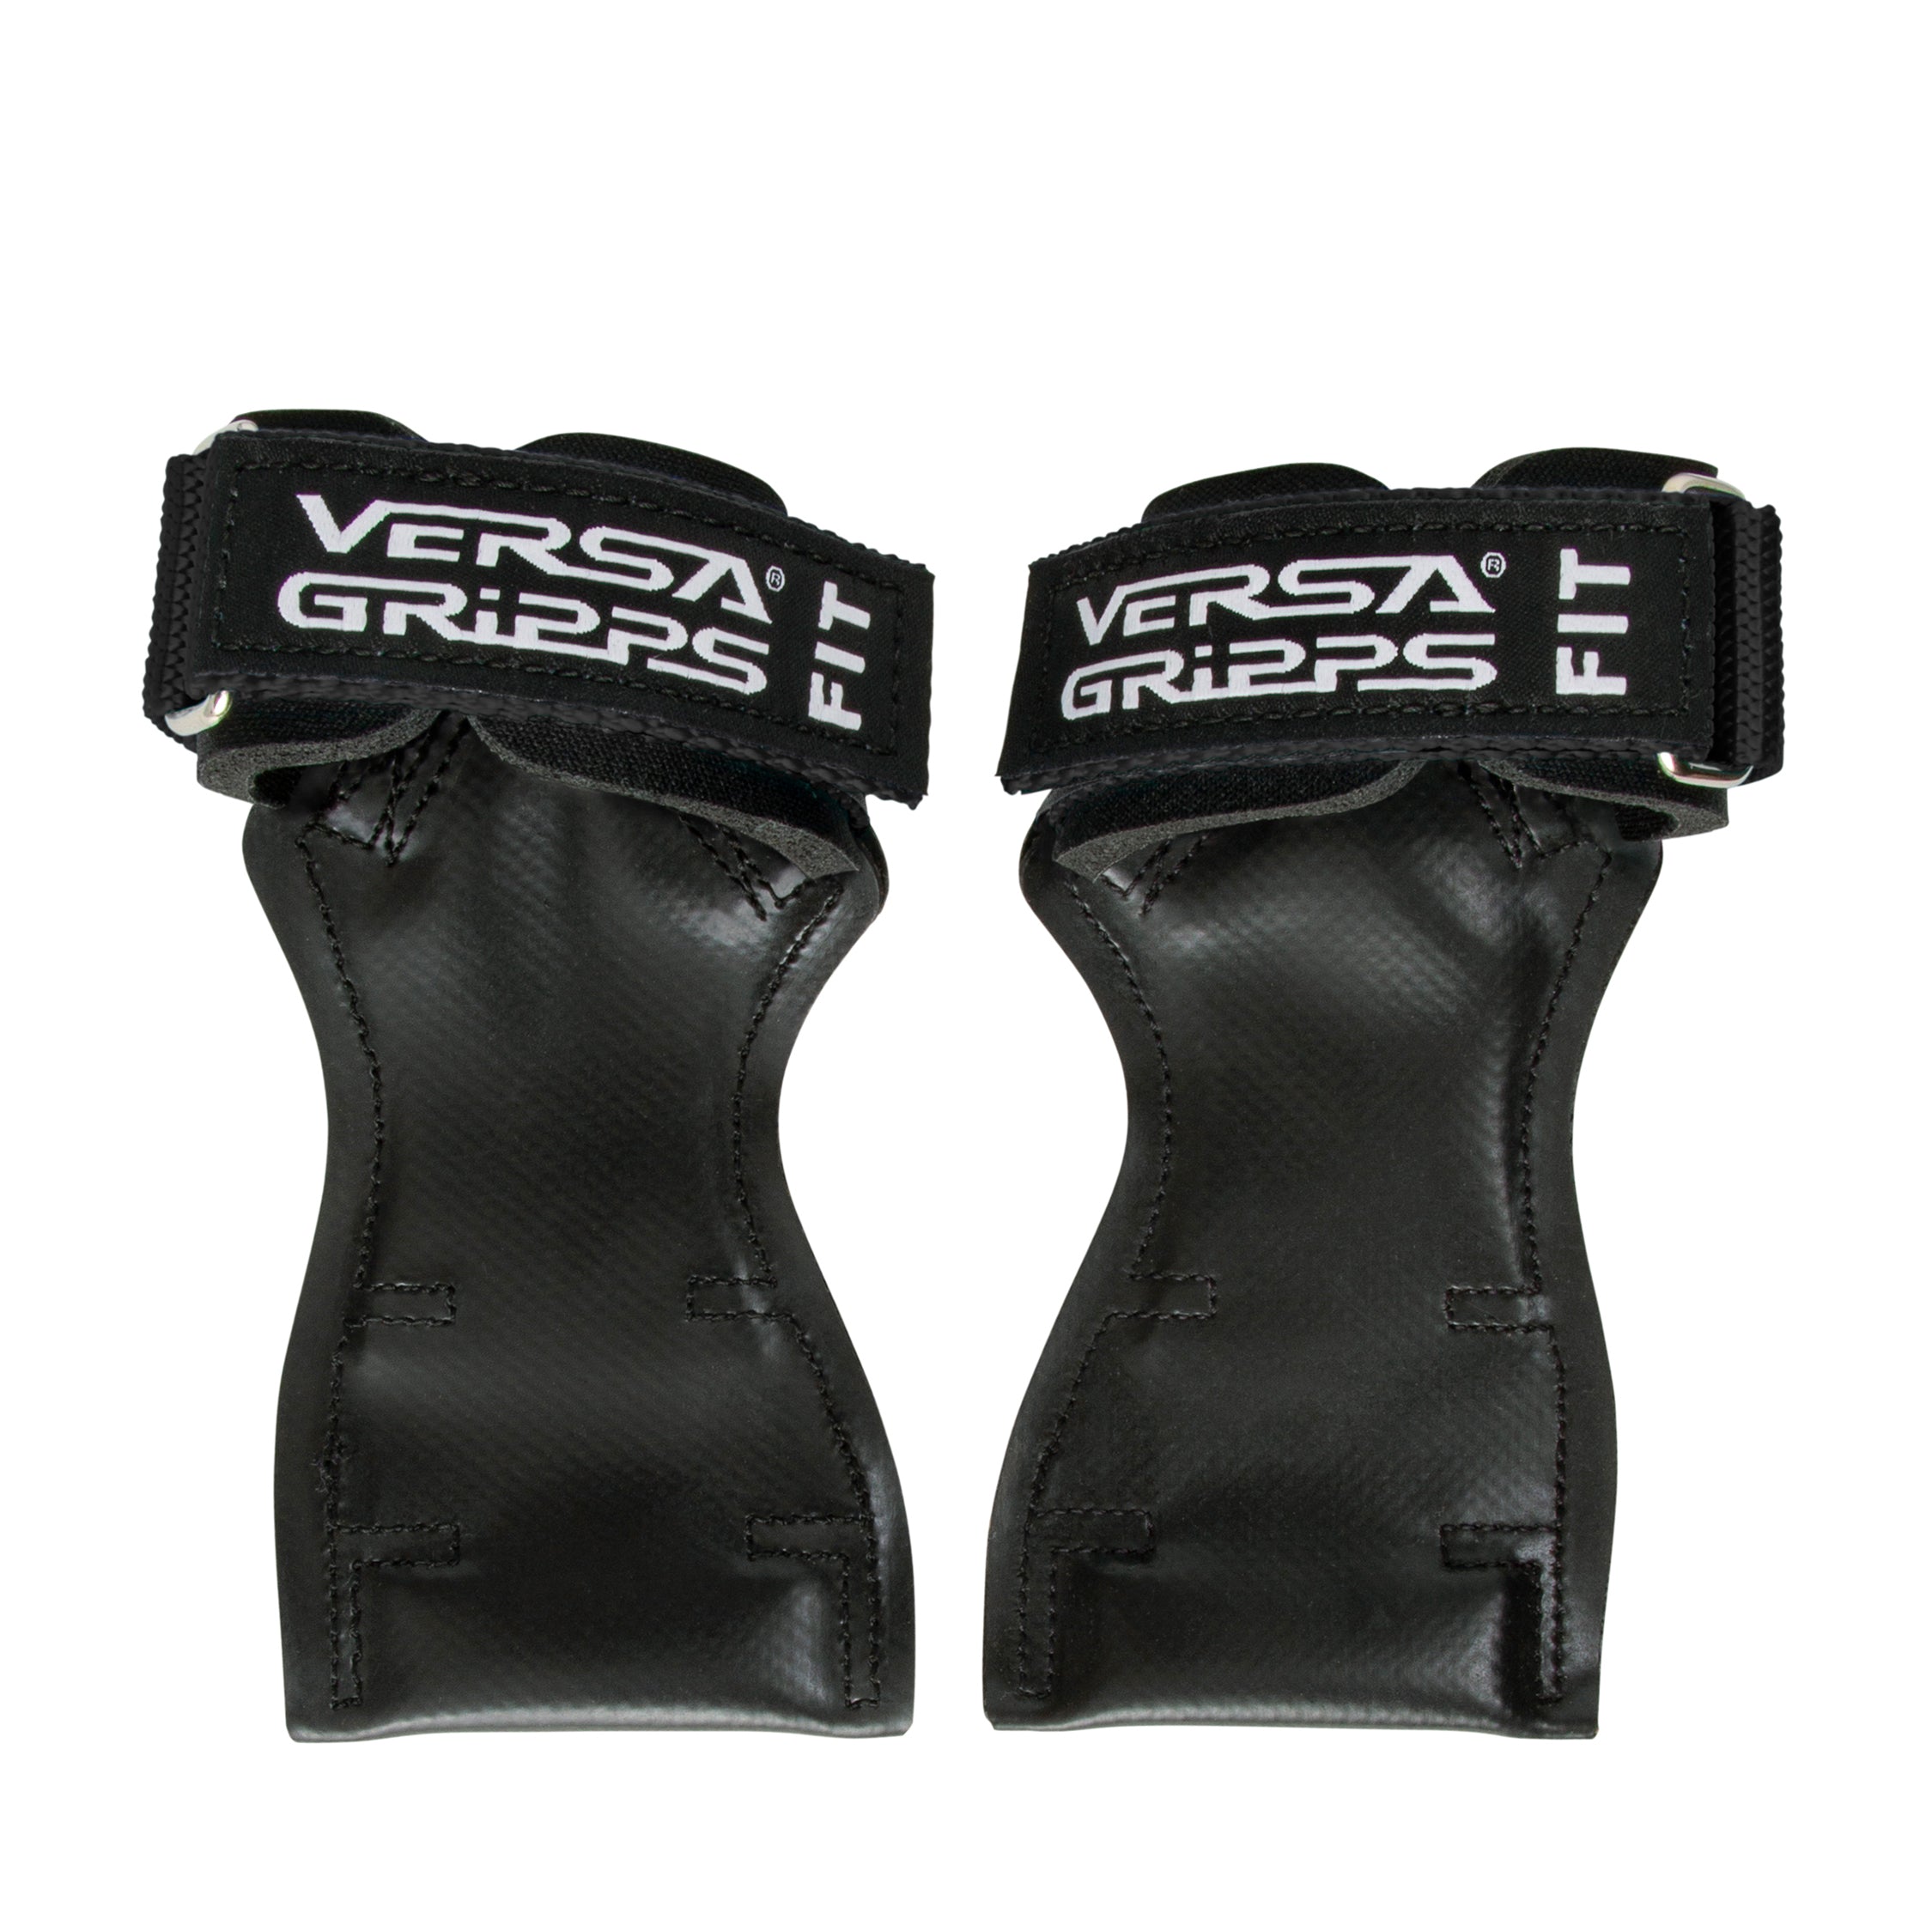 Versa Gripps PRO パワーグリップ 筋力トレーニング・リストラップ